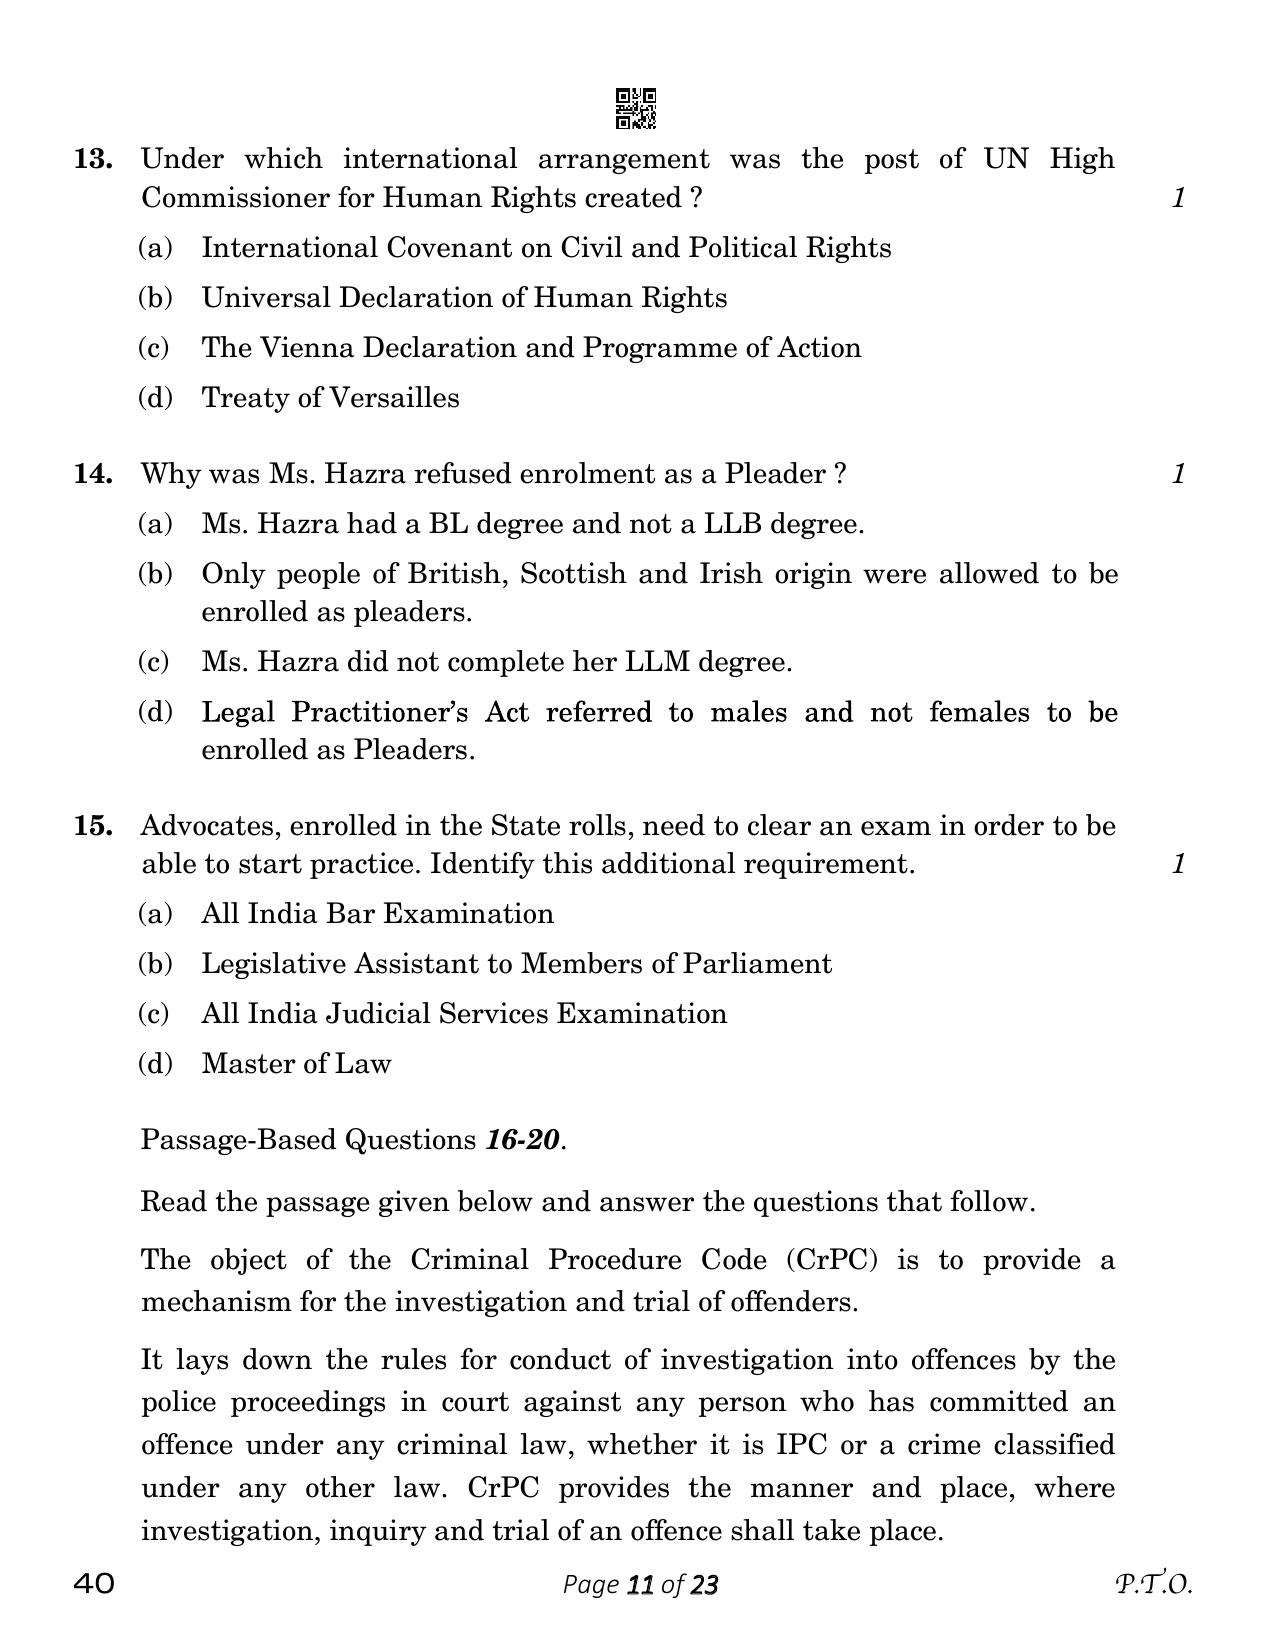 CBSE Class 12 Legal Studies (Compartment) 2023 Question Paper - Page 11